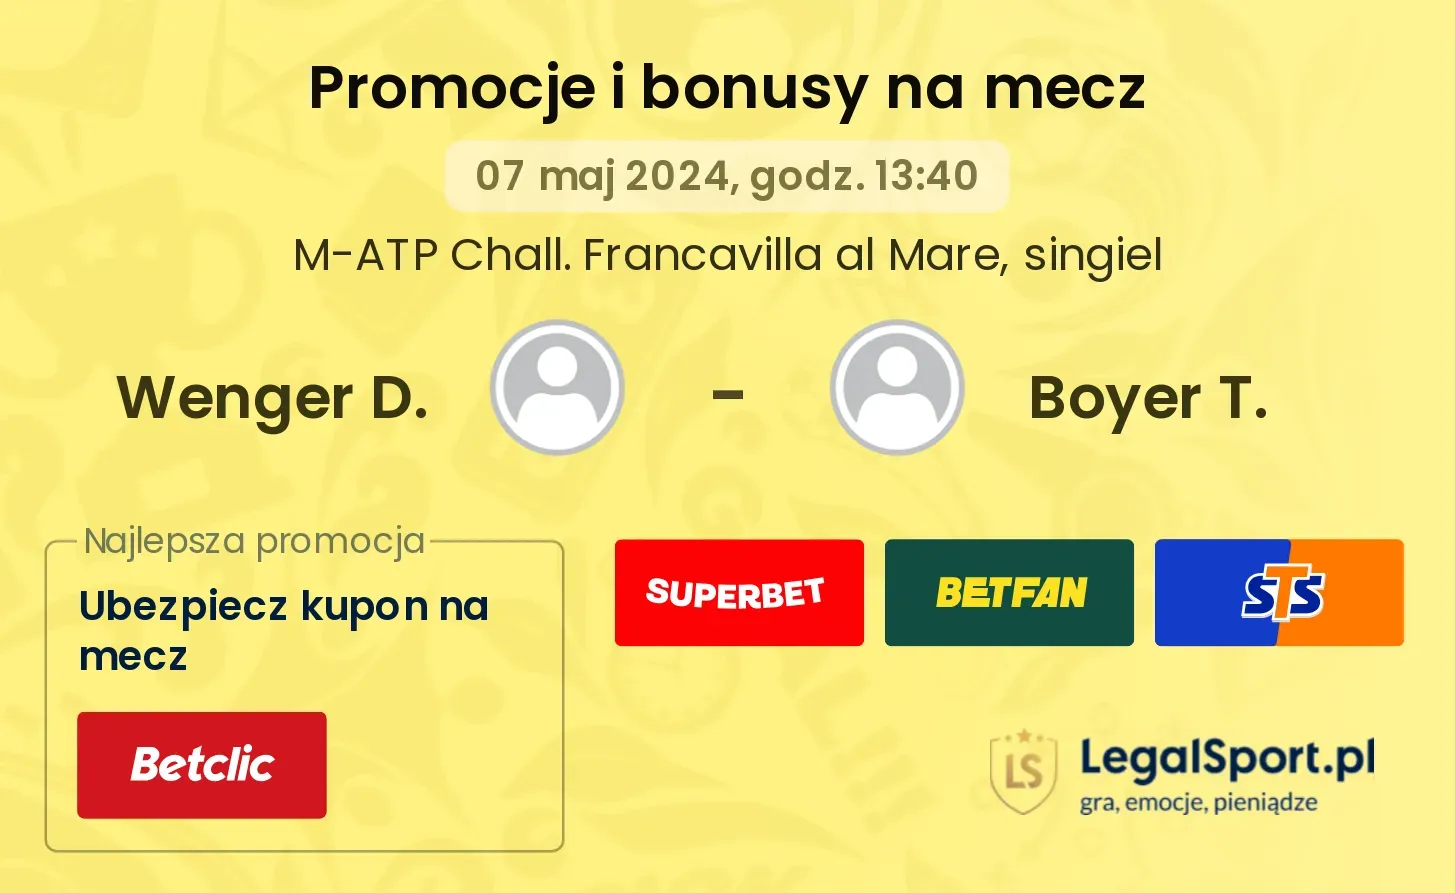 Wenger D. - Boyer T. promocje bonusy na mecz